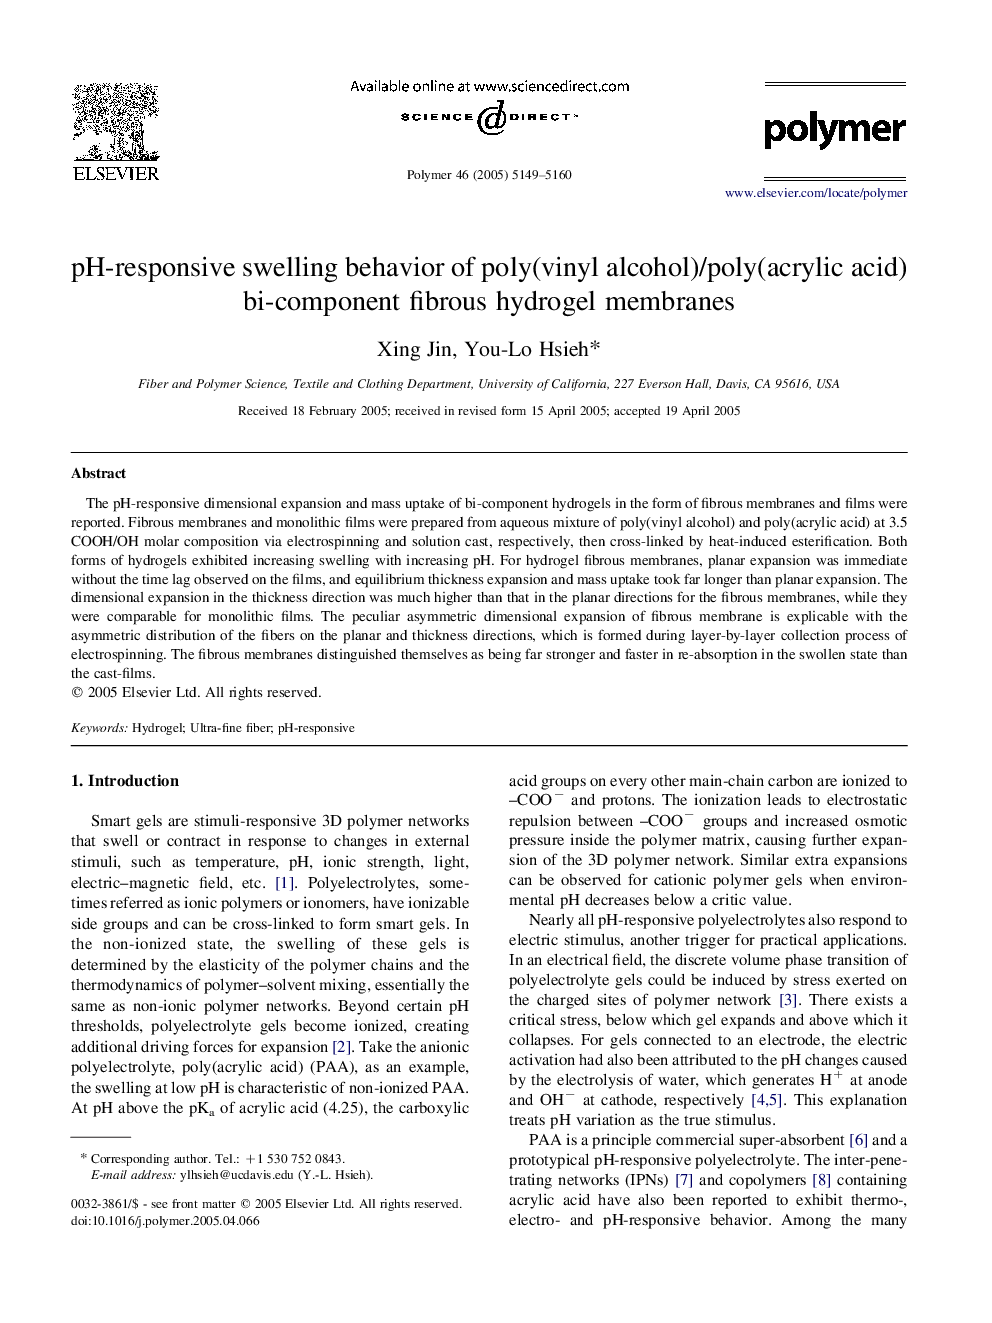 pH-responsive swelling behavior of poly(vinyl alcohol)/poly(acrylic acid) bi-component fibrous hydrogel membranes